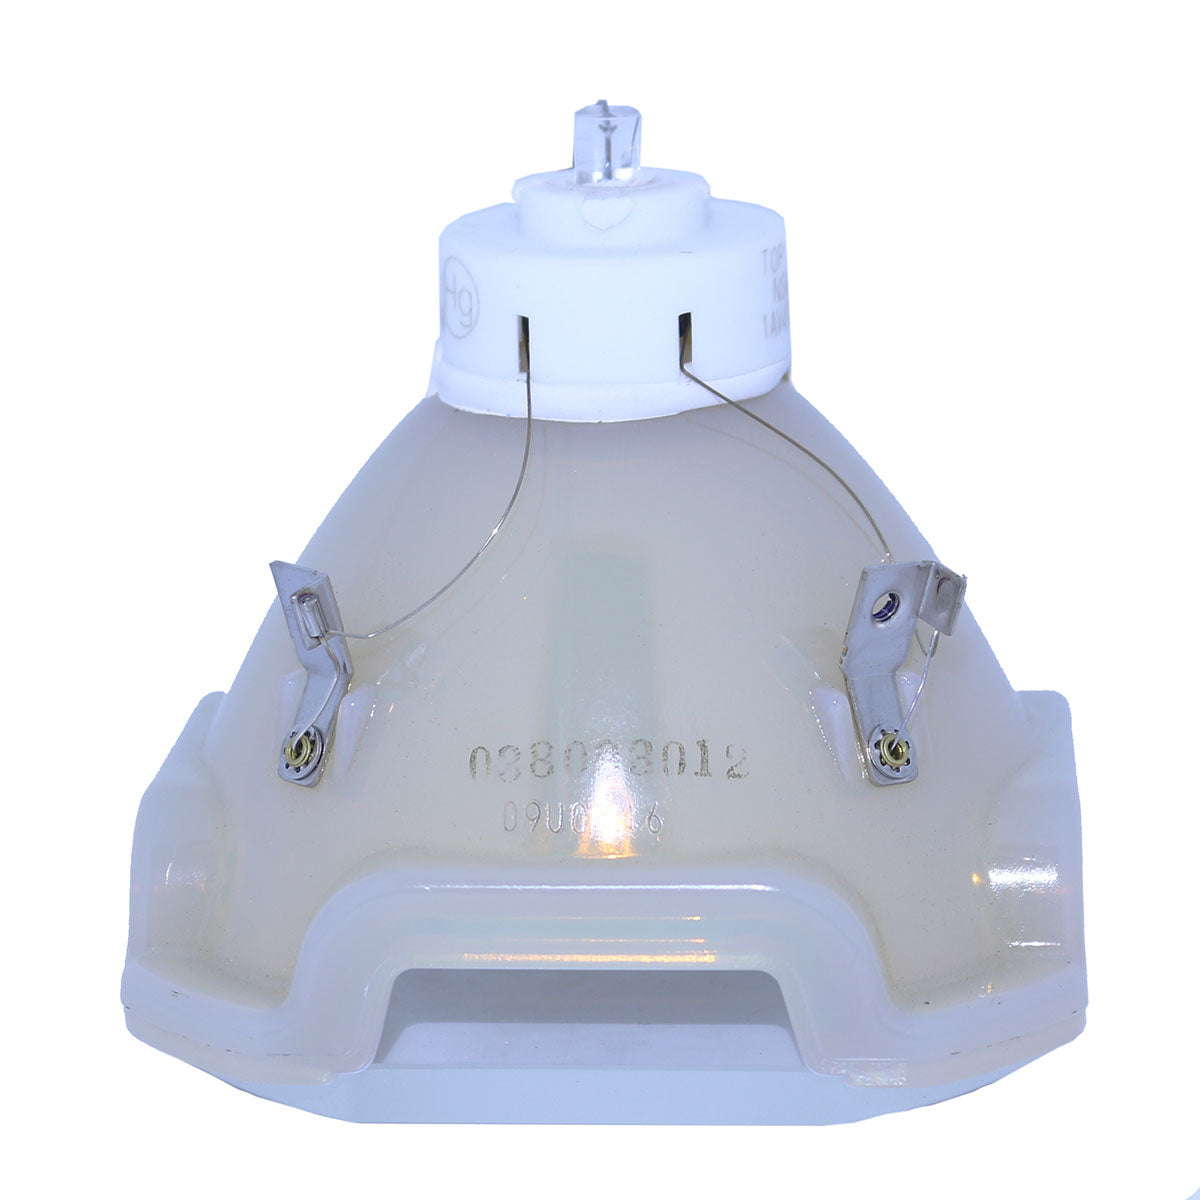 Christie 003-120333-01 Ushio Projector Bare Lamp